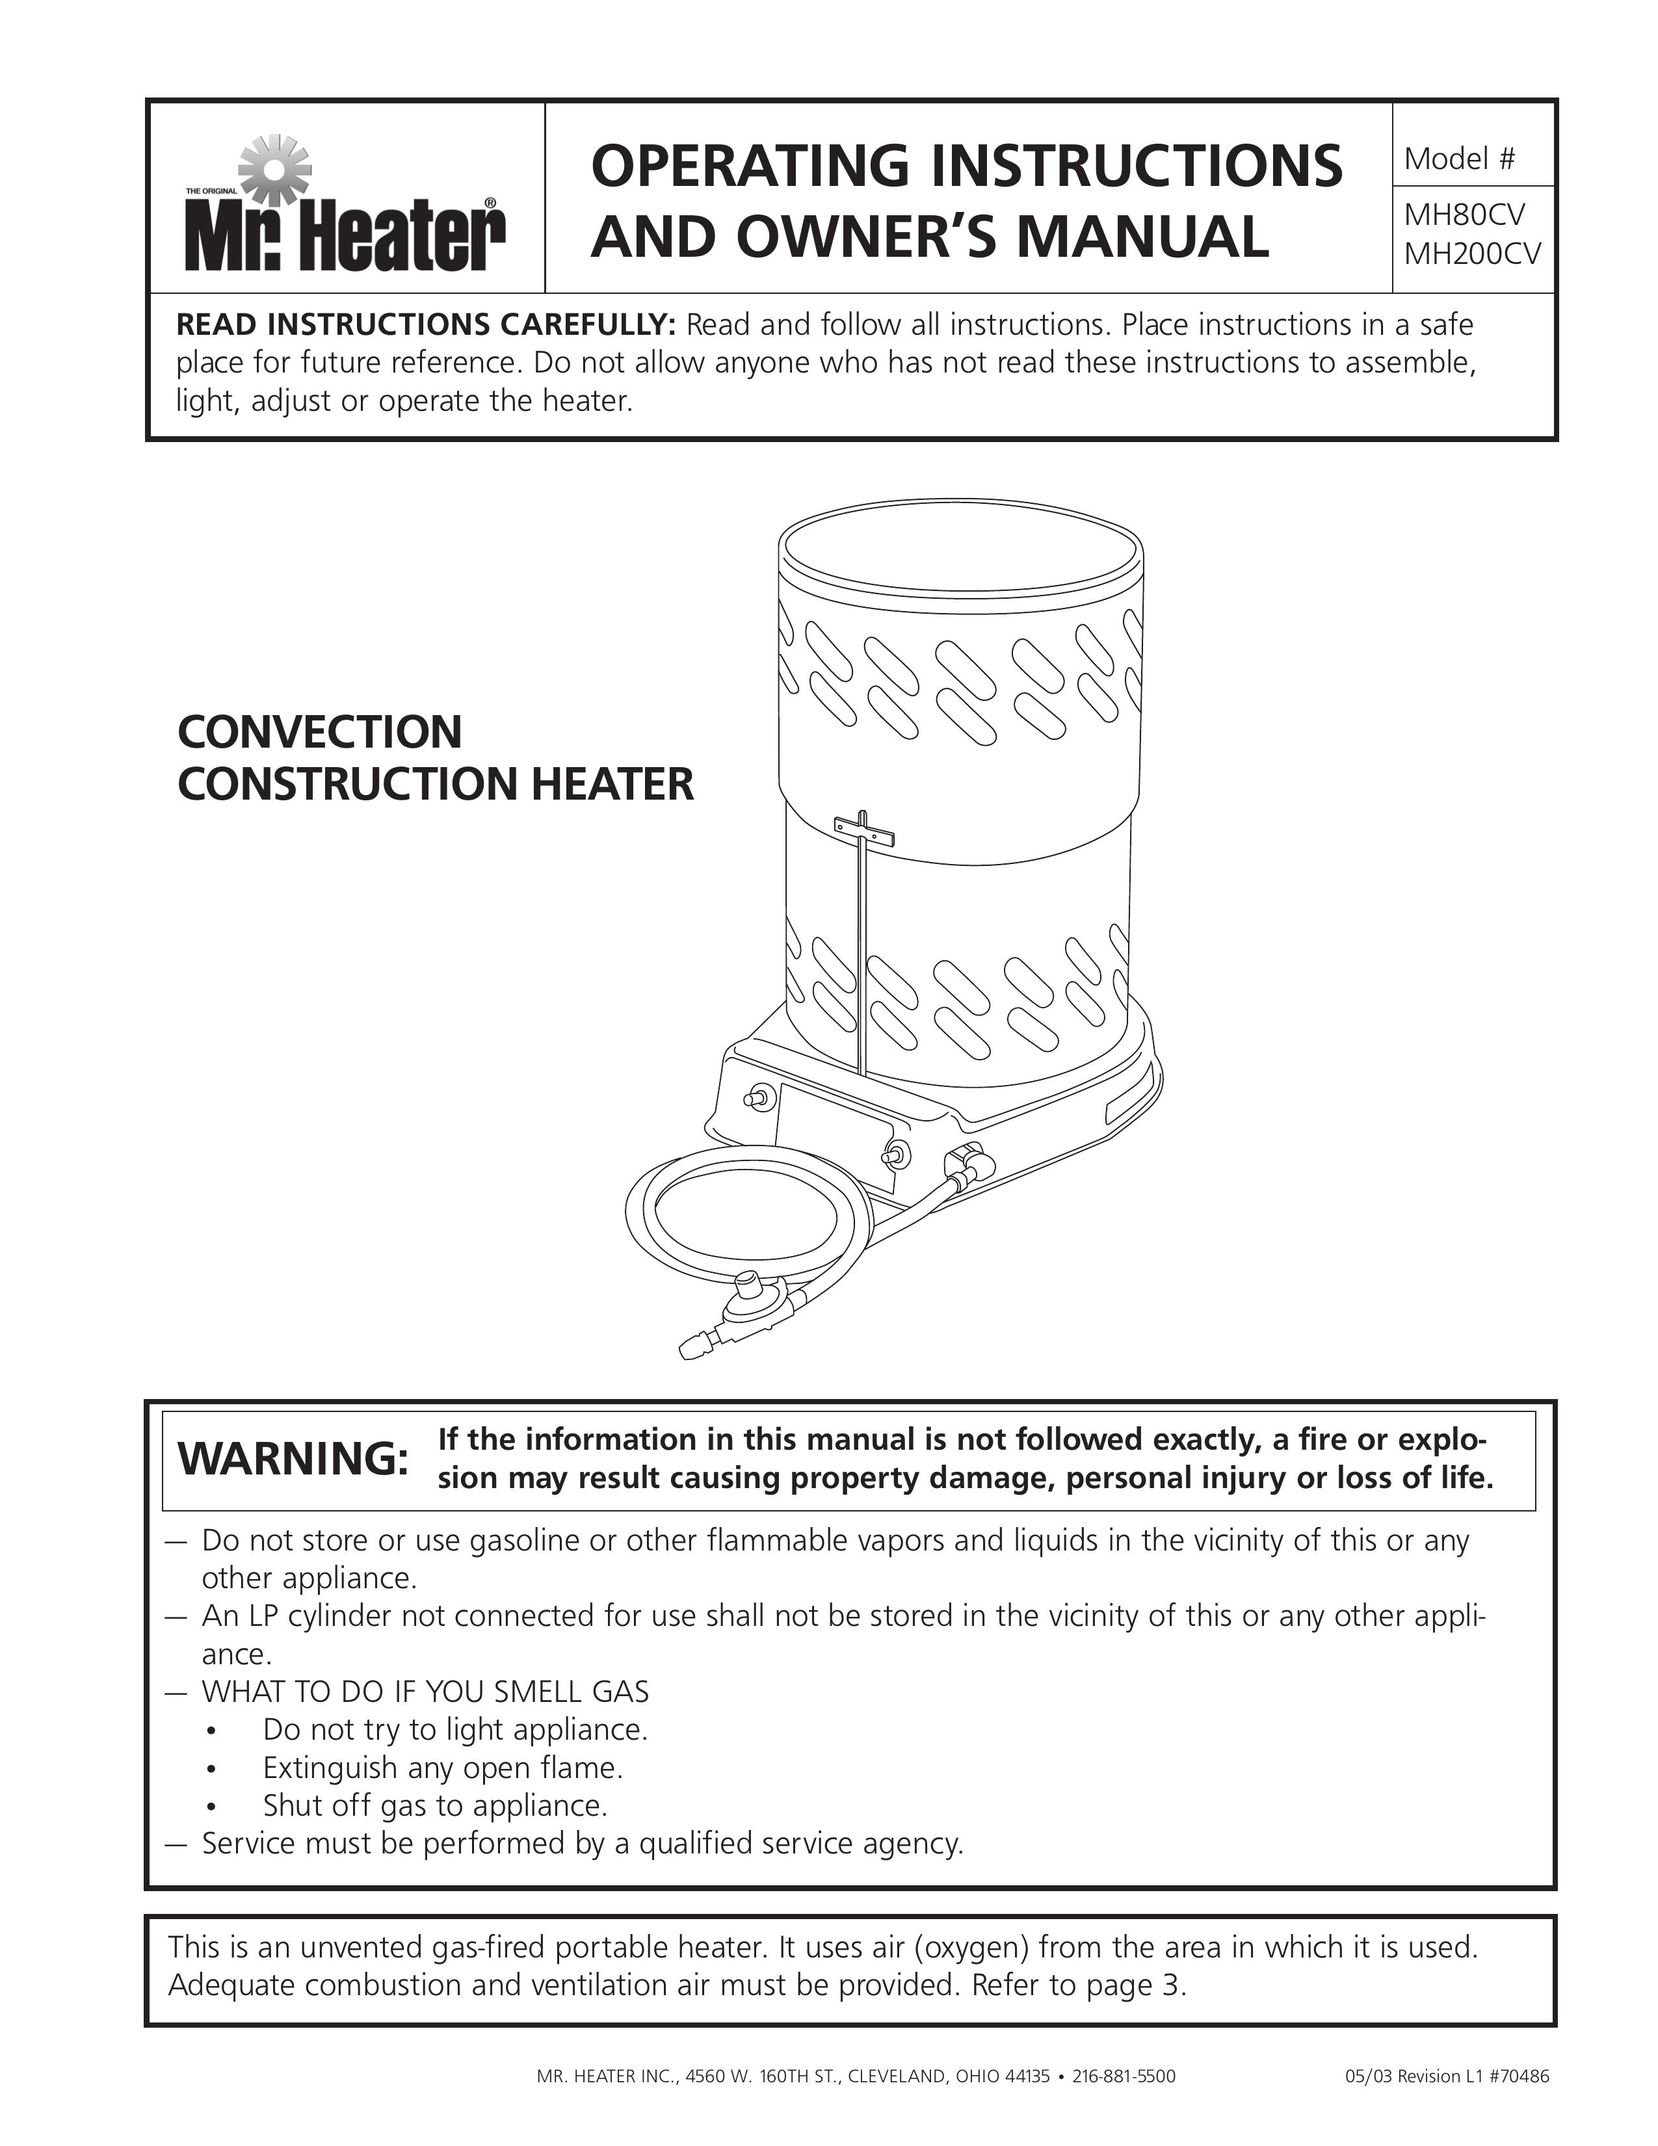 Enerco MH200CV Electric Heater User Manual